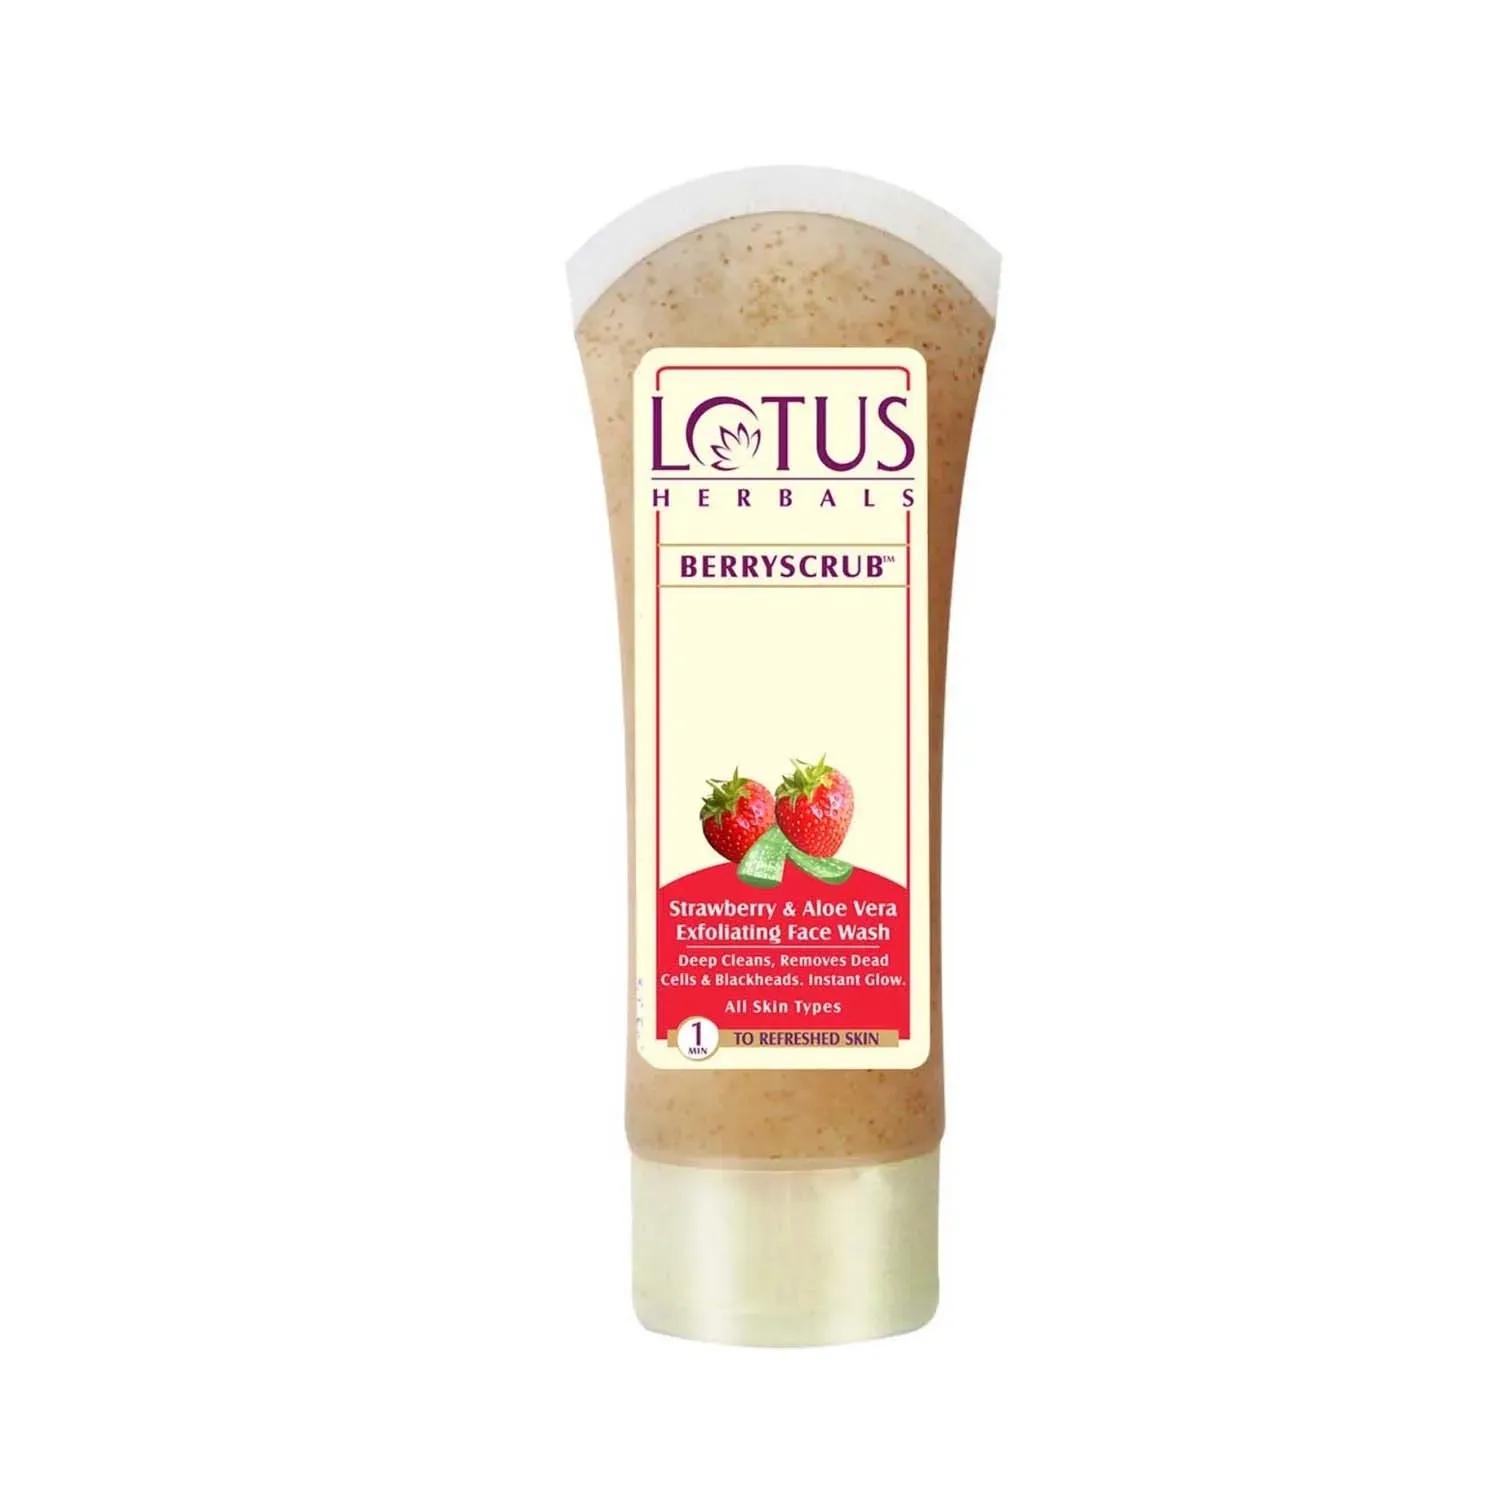 Lotus Herbals Berryscrub Strawberry & Aloe Vera Exfoliating Face Wash - (120g)